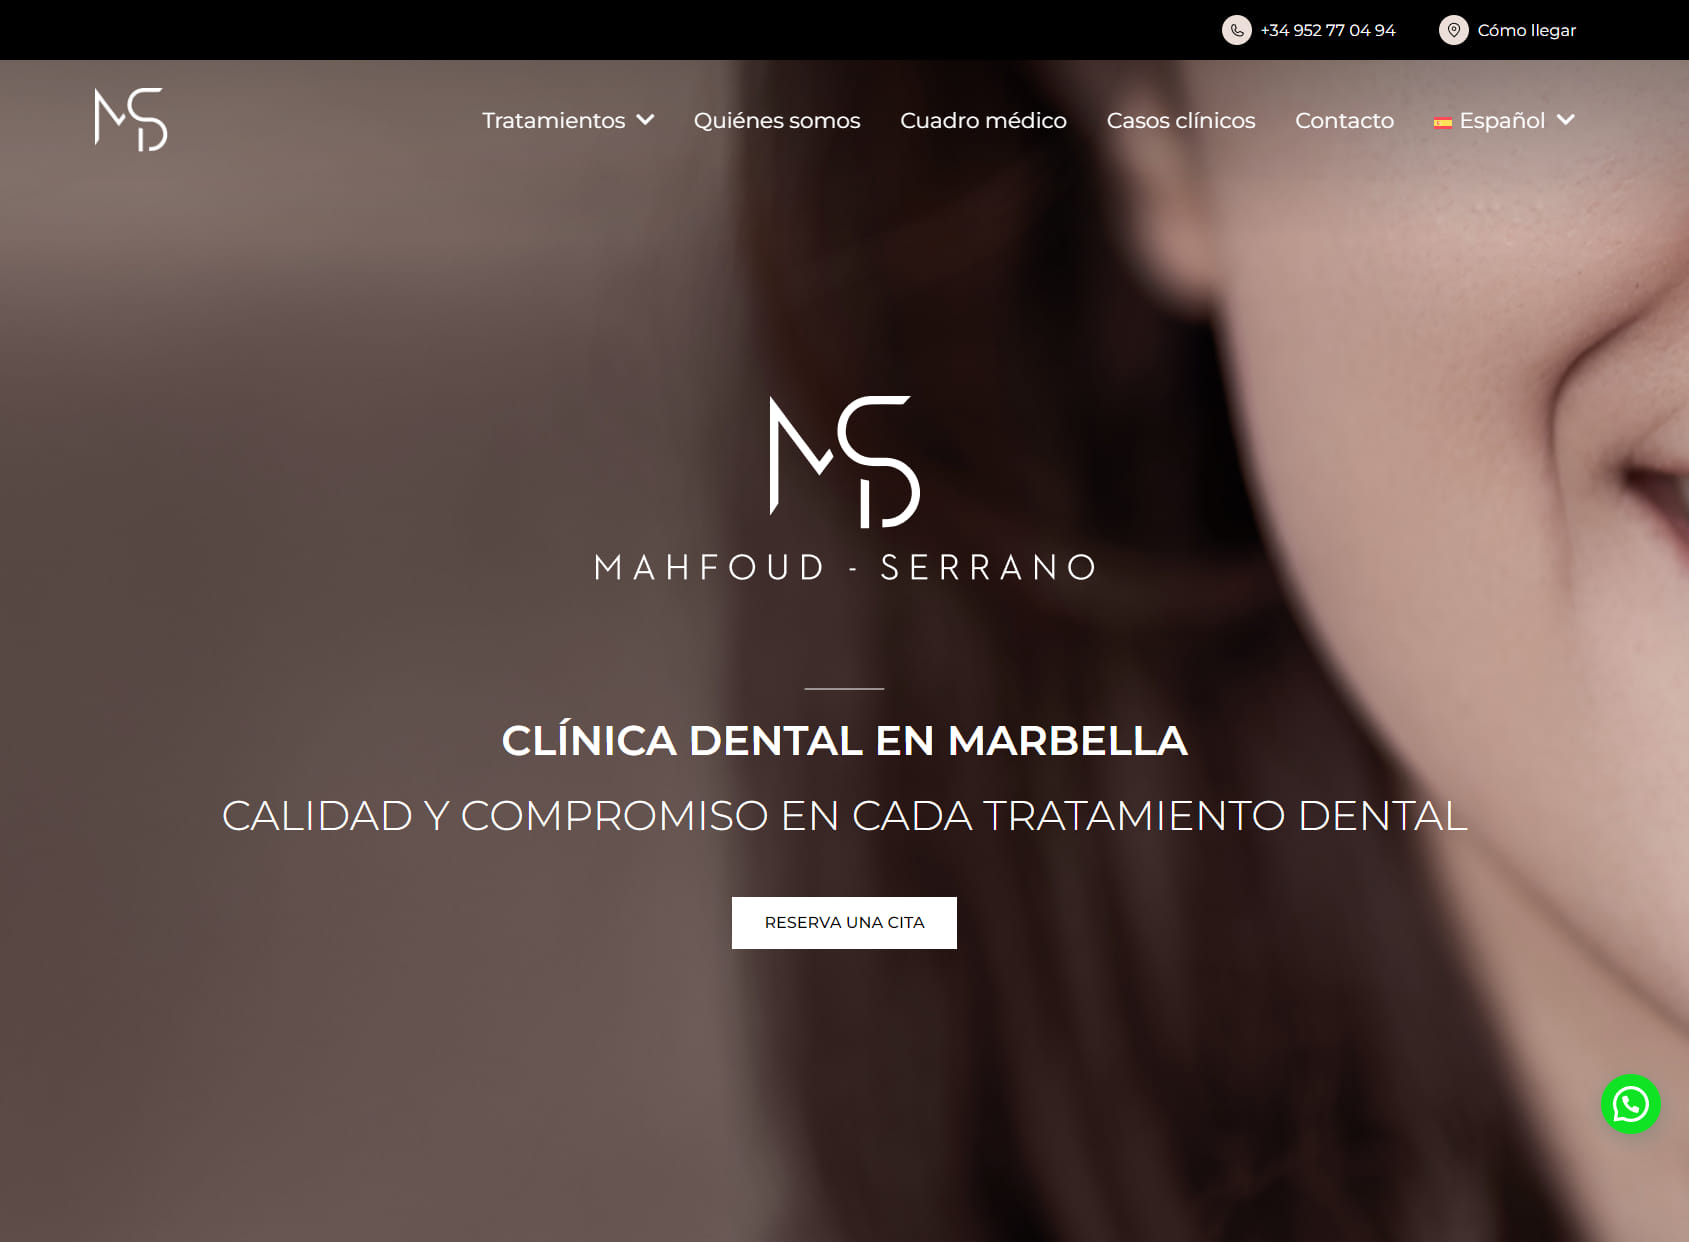 Mahfoud Serrano clinica dental